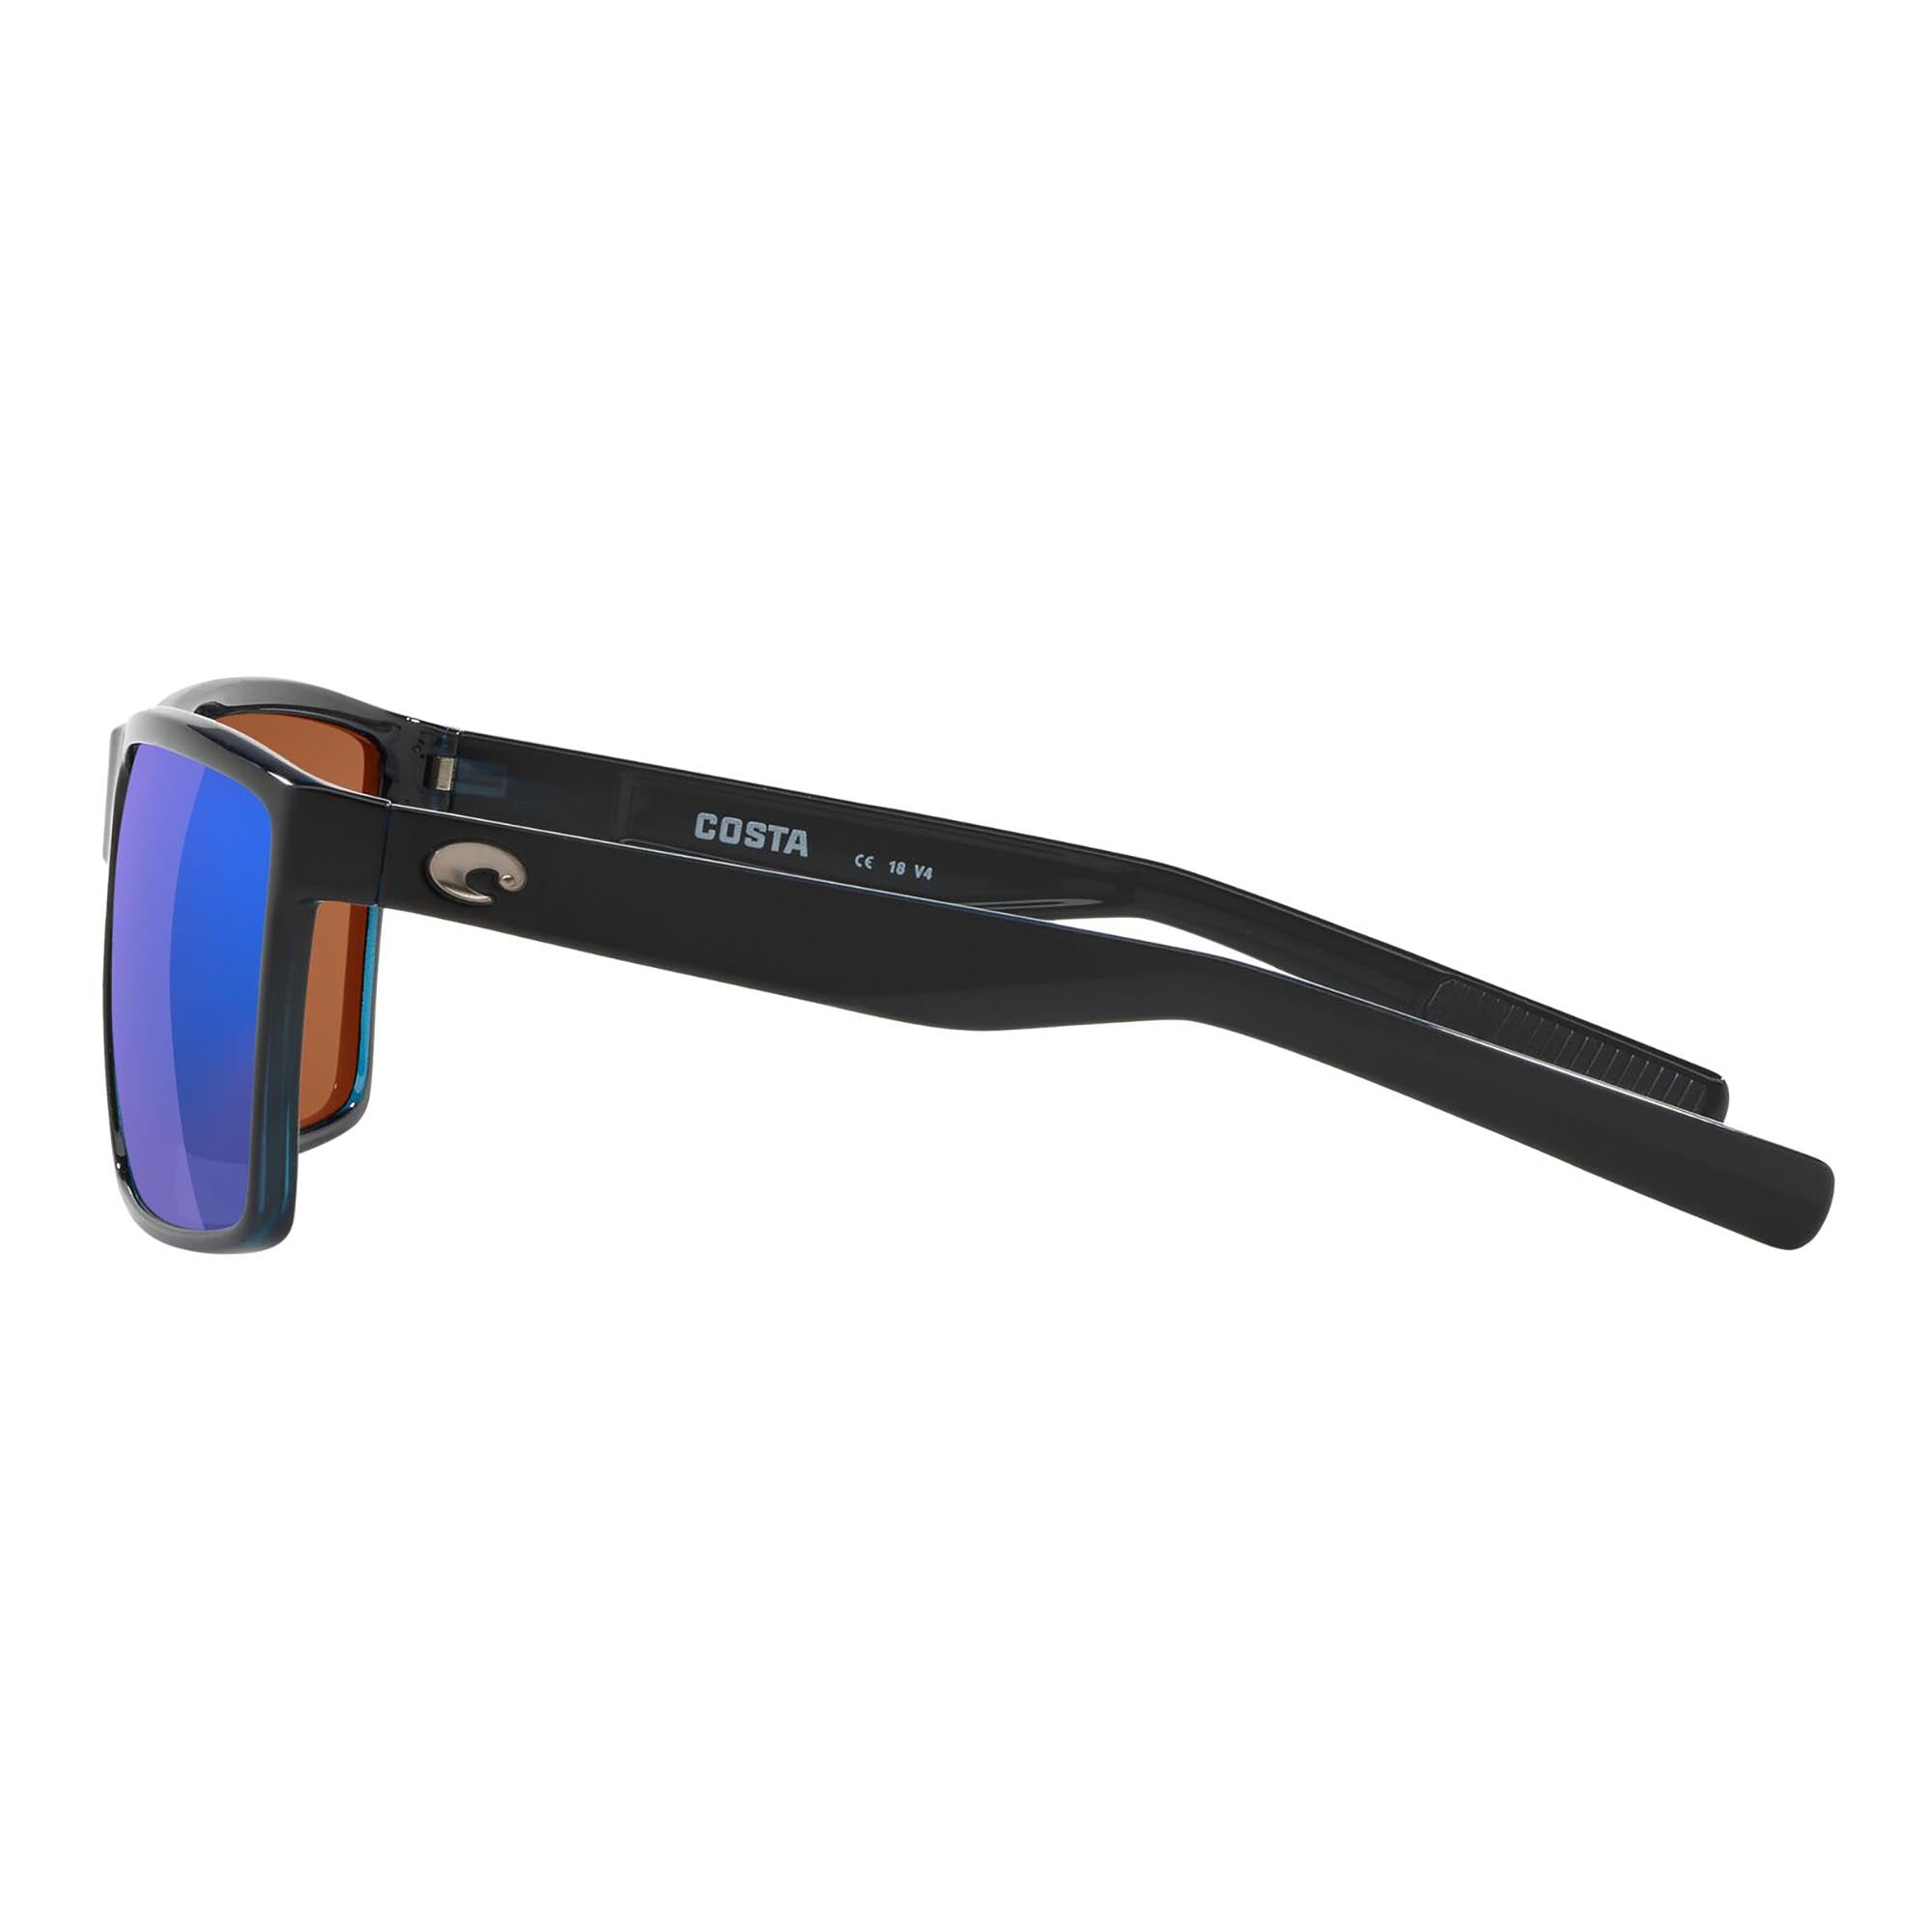 Costa Rincon Polarized 580 Sunglasses at The Fly Shop